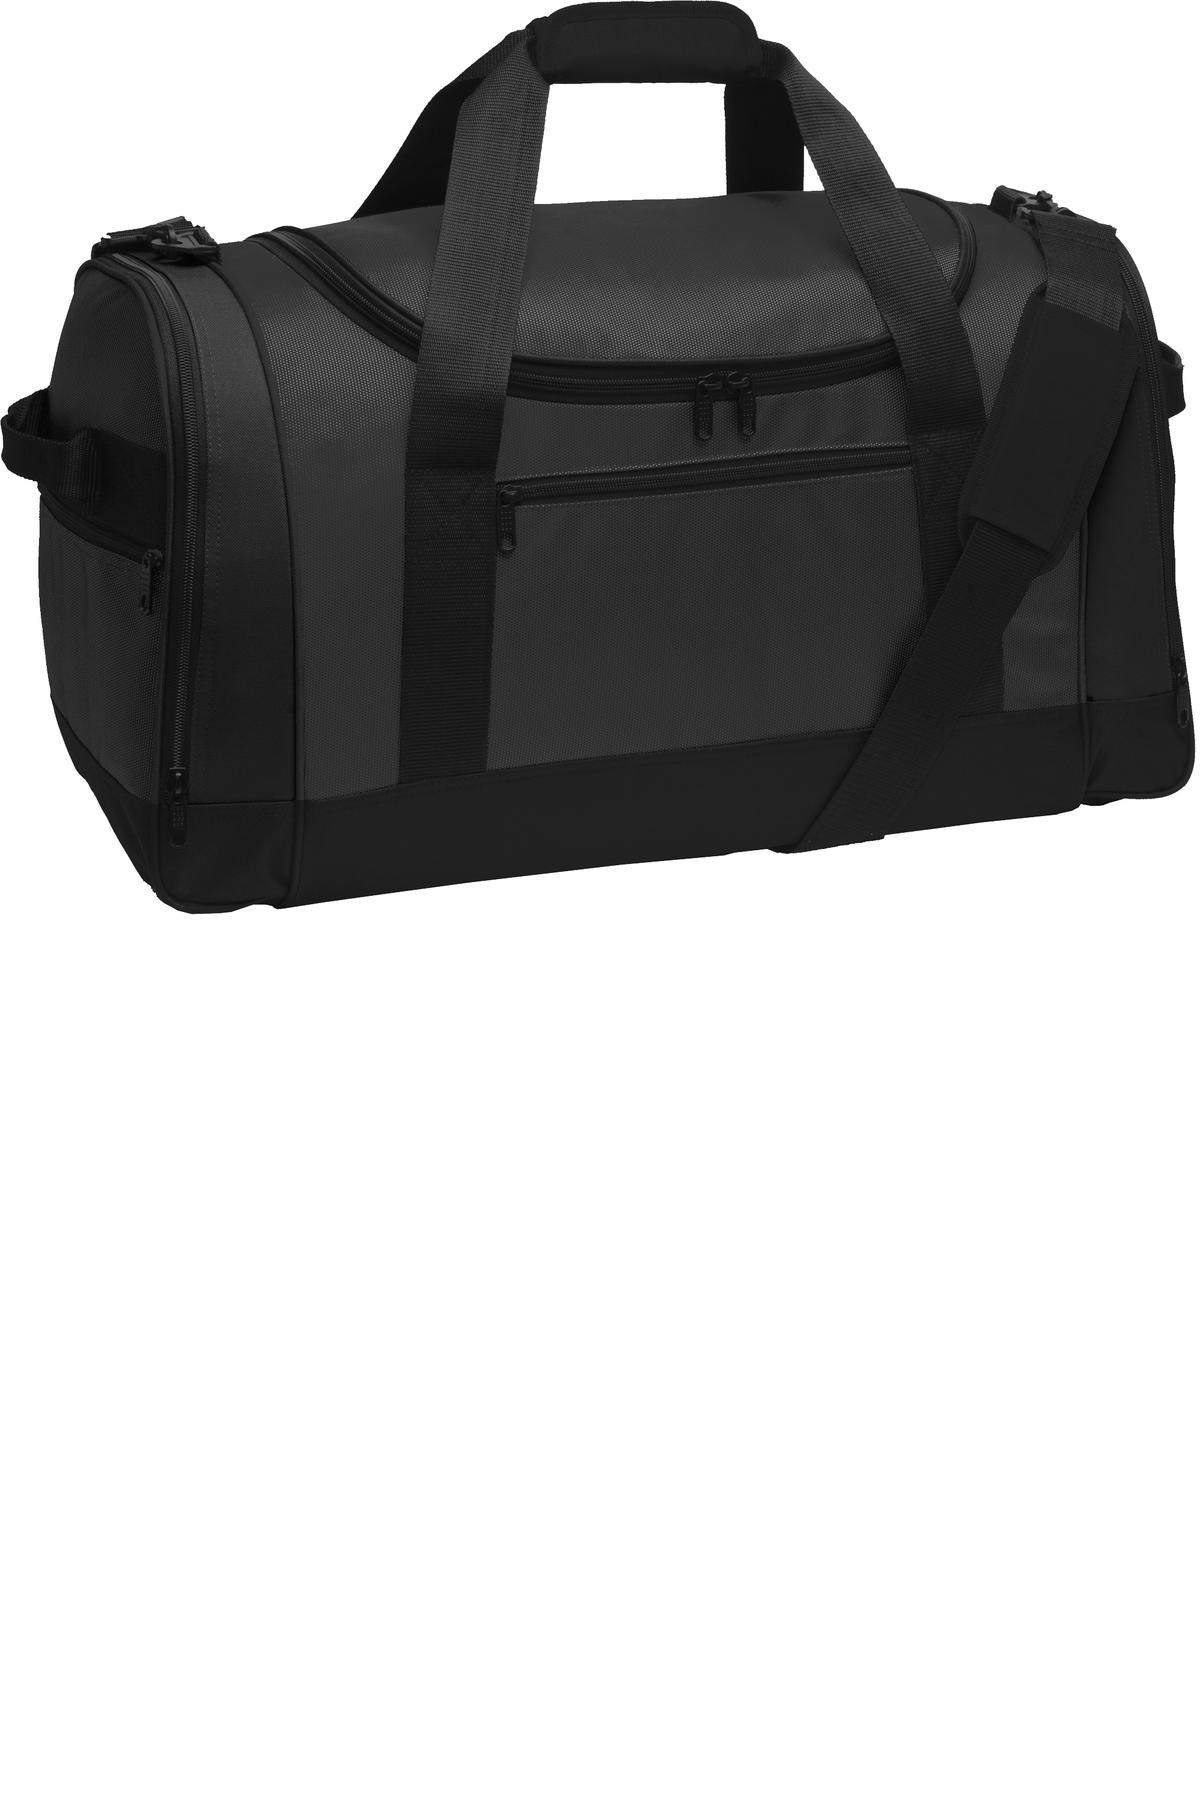 Photo of Port Authority Bags BG800  color  Dark Grey/ Black